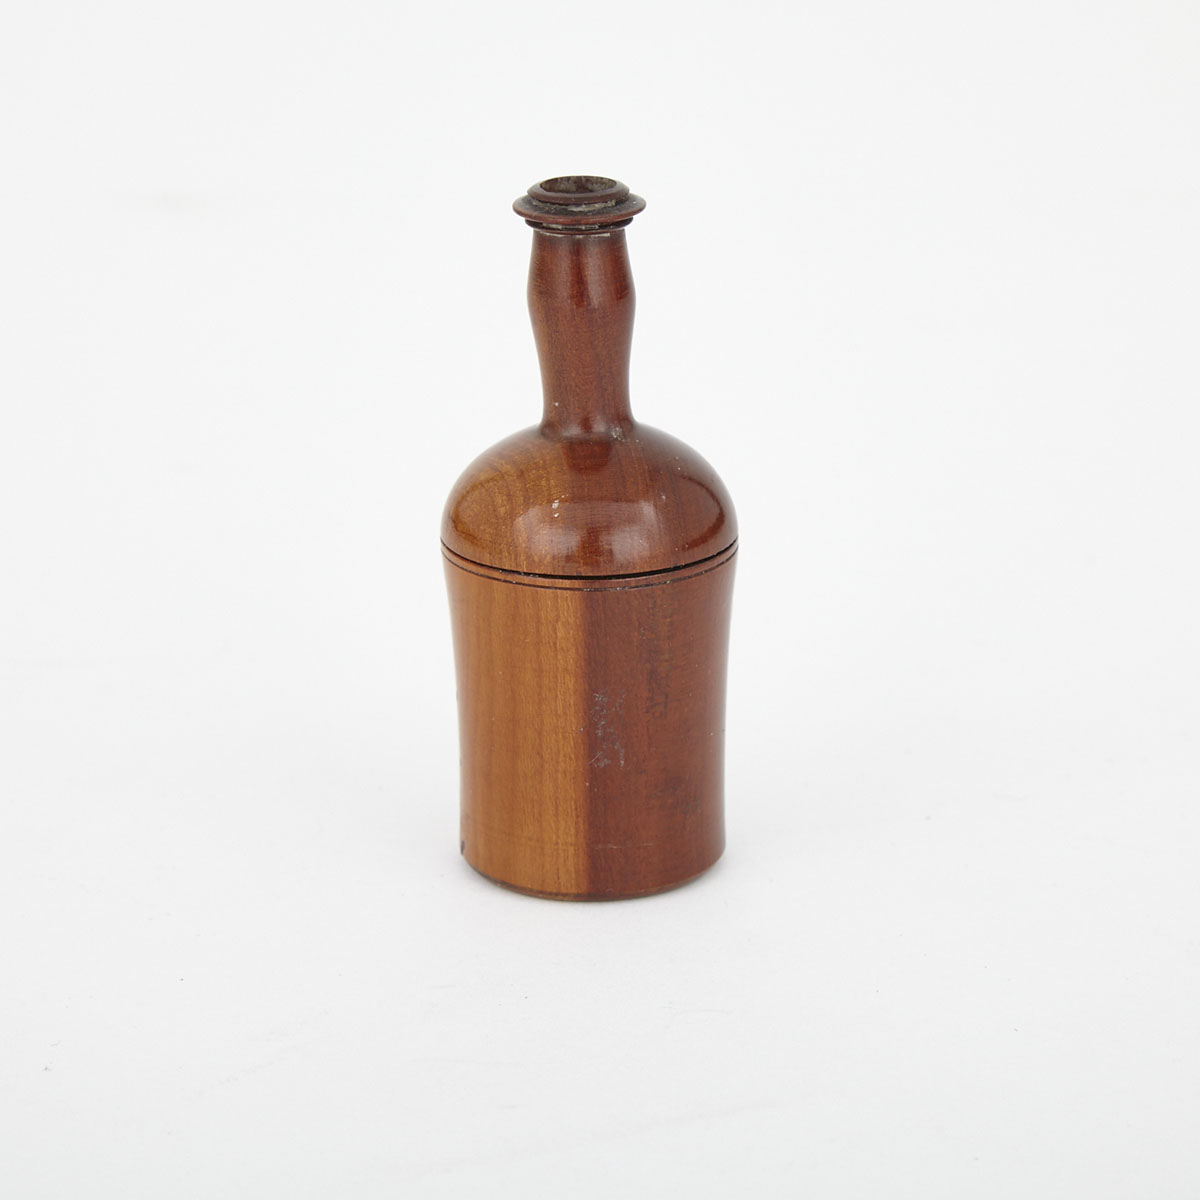 Turned Treen Bottle Form Nutmeg Grater, early 19th century